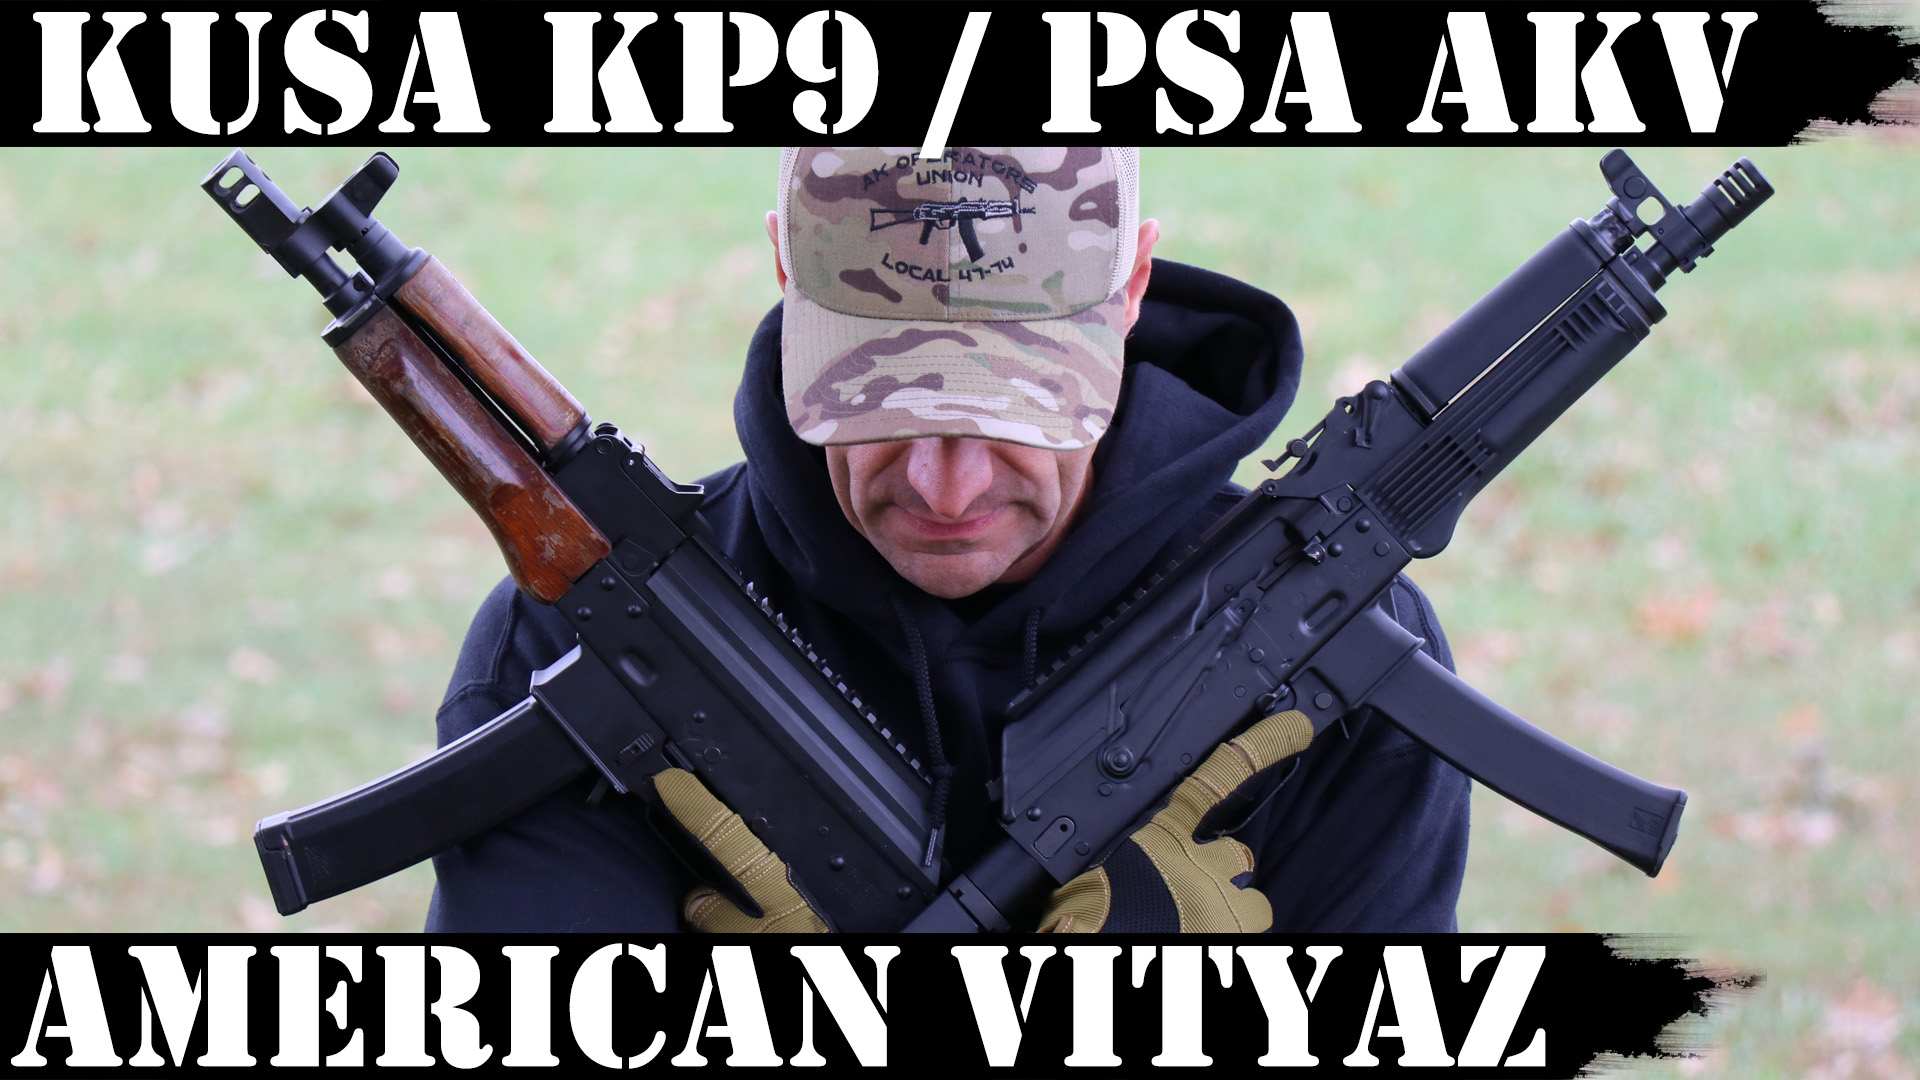 Kalashnikov USA KP9 / PSA AKV!